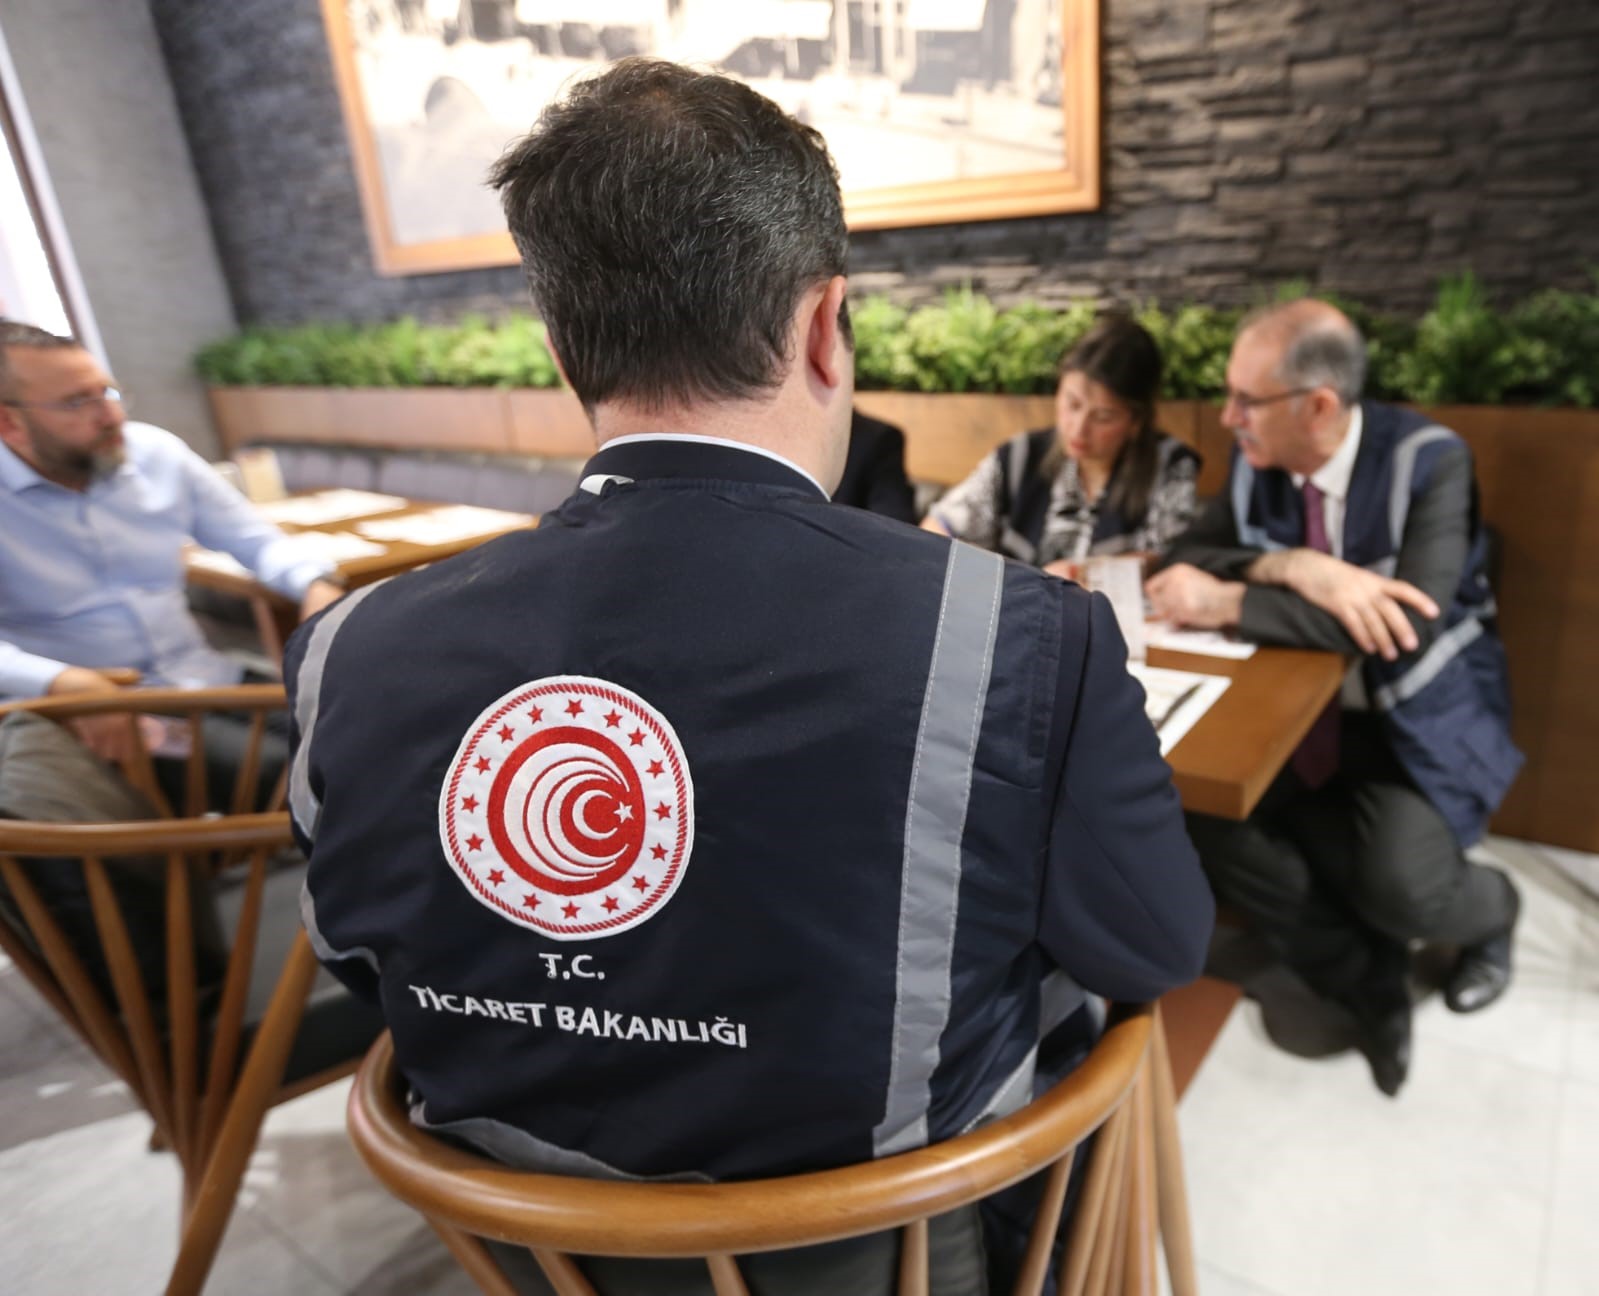 Bursa’da fiyat listesi kuralına uymayan işletmelere 1 milyon 776 bin 682 lira ceza kesildi